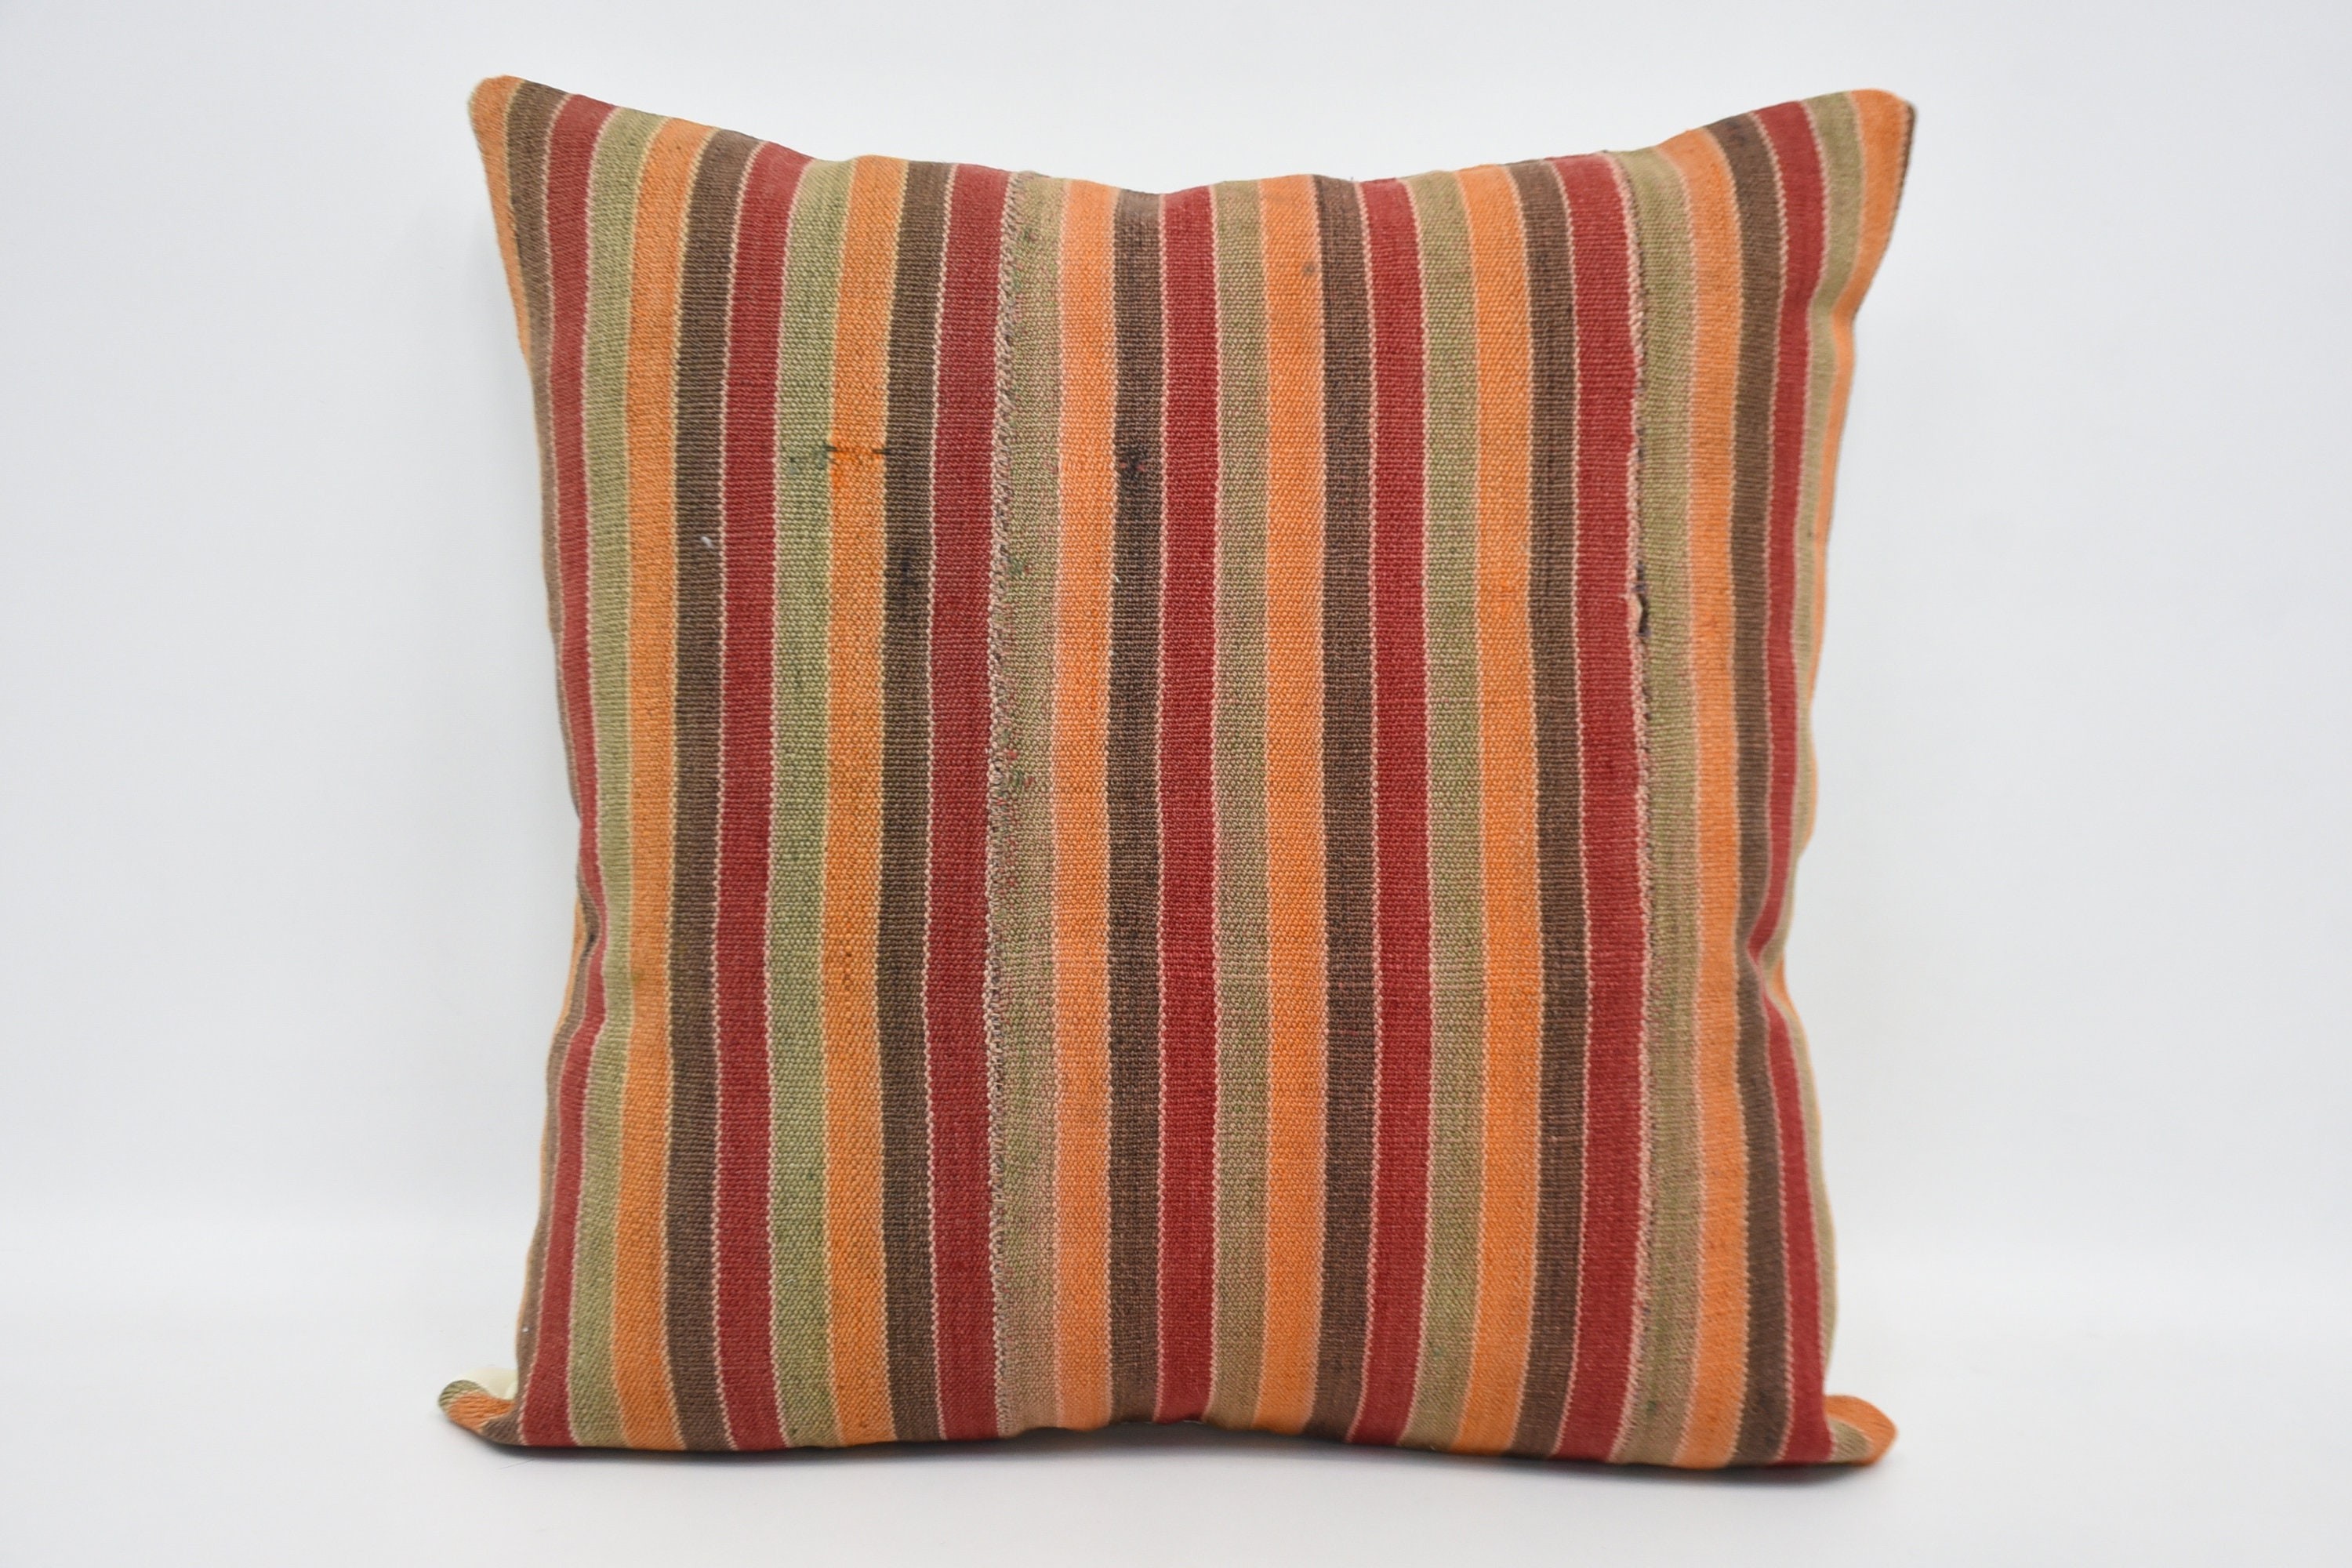 Handmade Kilim Cushion, Turkish Pillow, 24"x24" Orange Cushion Cover, Garden Cushion Cover, Turkish Kilim Pillow